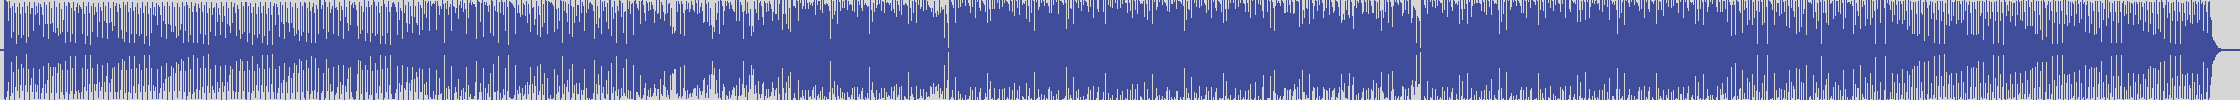 atomic_recordings [AR011] Mauritian Rhythms - Purple Daze [Bay Ran Mix] audio wave form